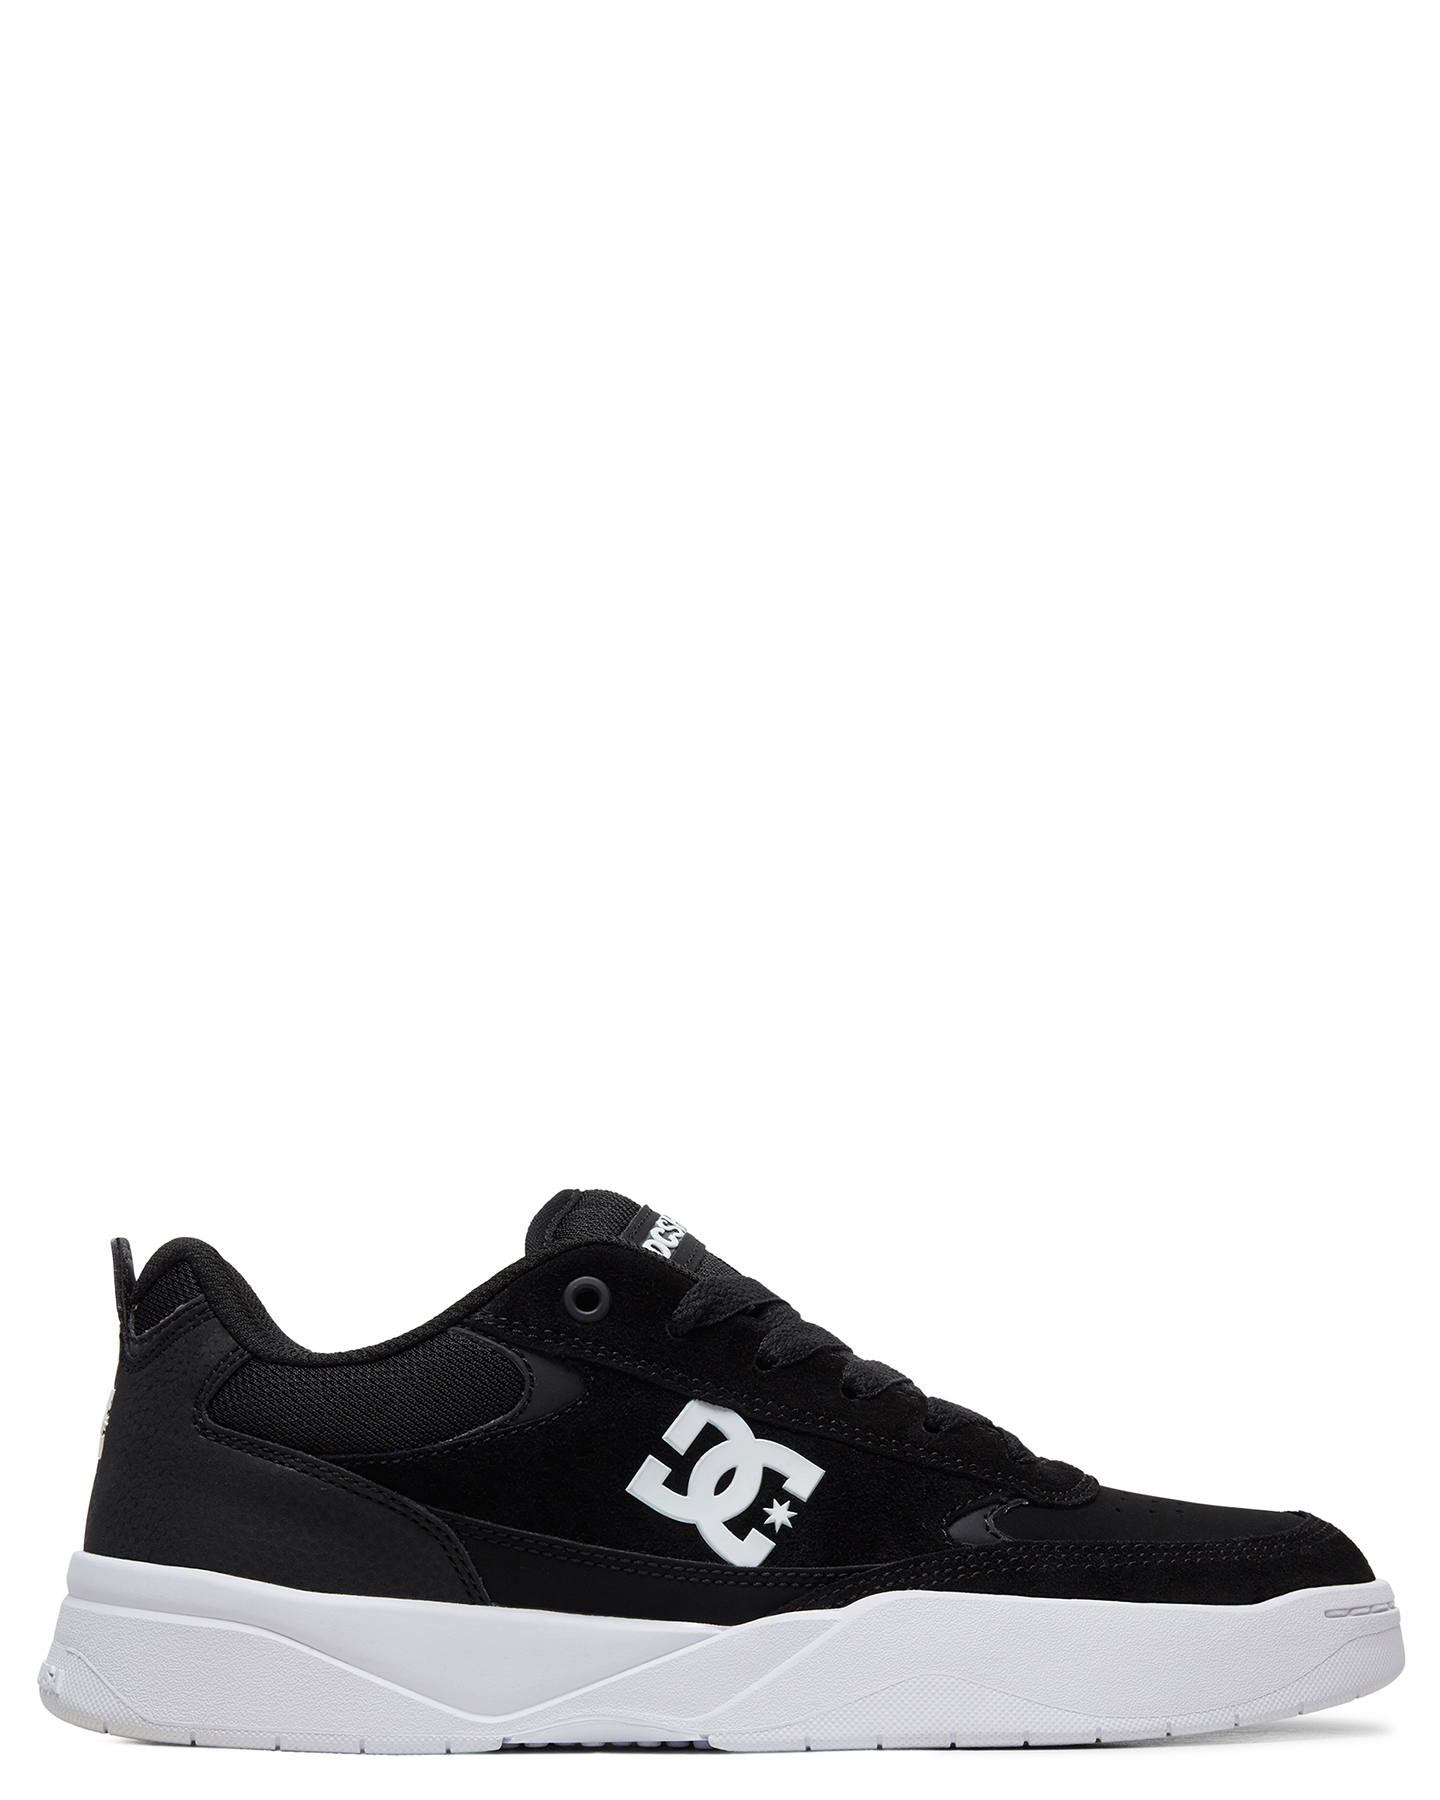 Dc Shoes Mens Penza Shoe - Black/White 